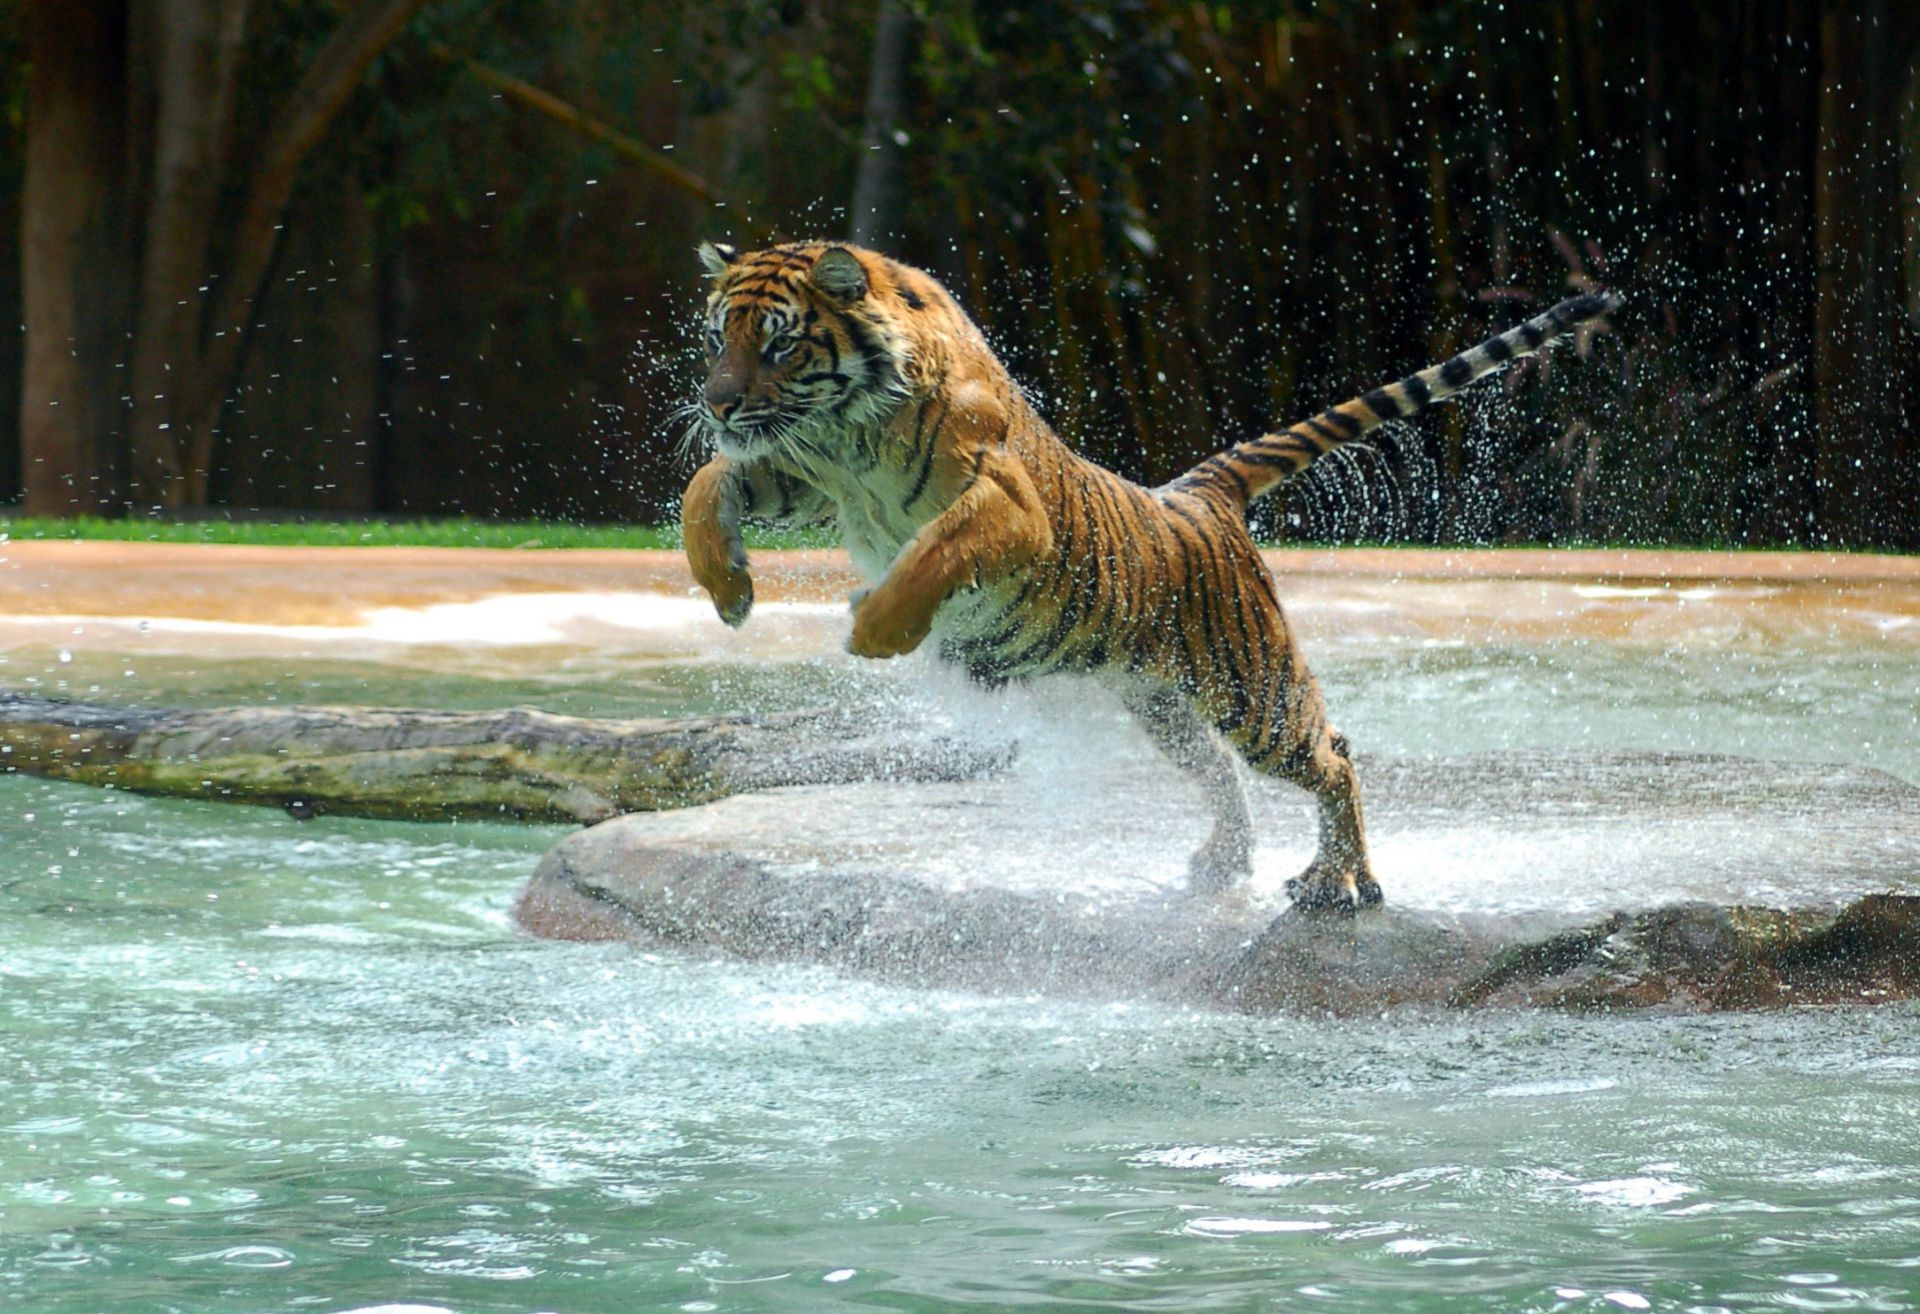 tigers water wildlife nature mammal wild danger big predator animal outdoors zoo tiger motion cat swimming aggression river power